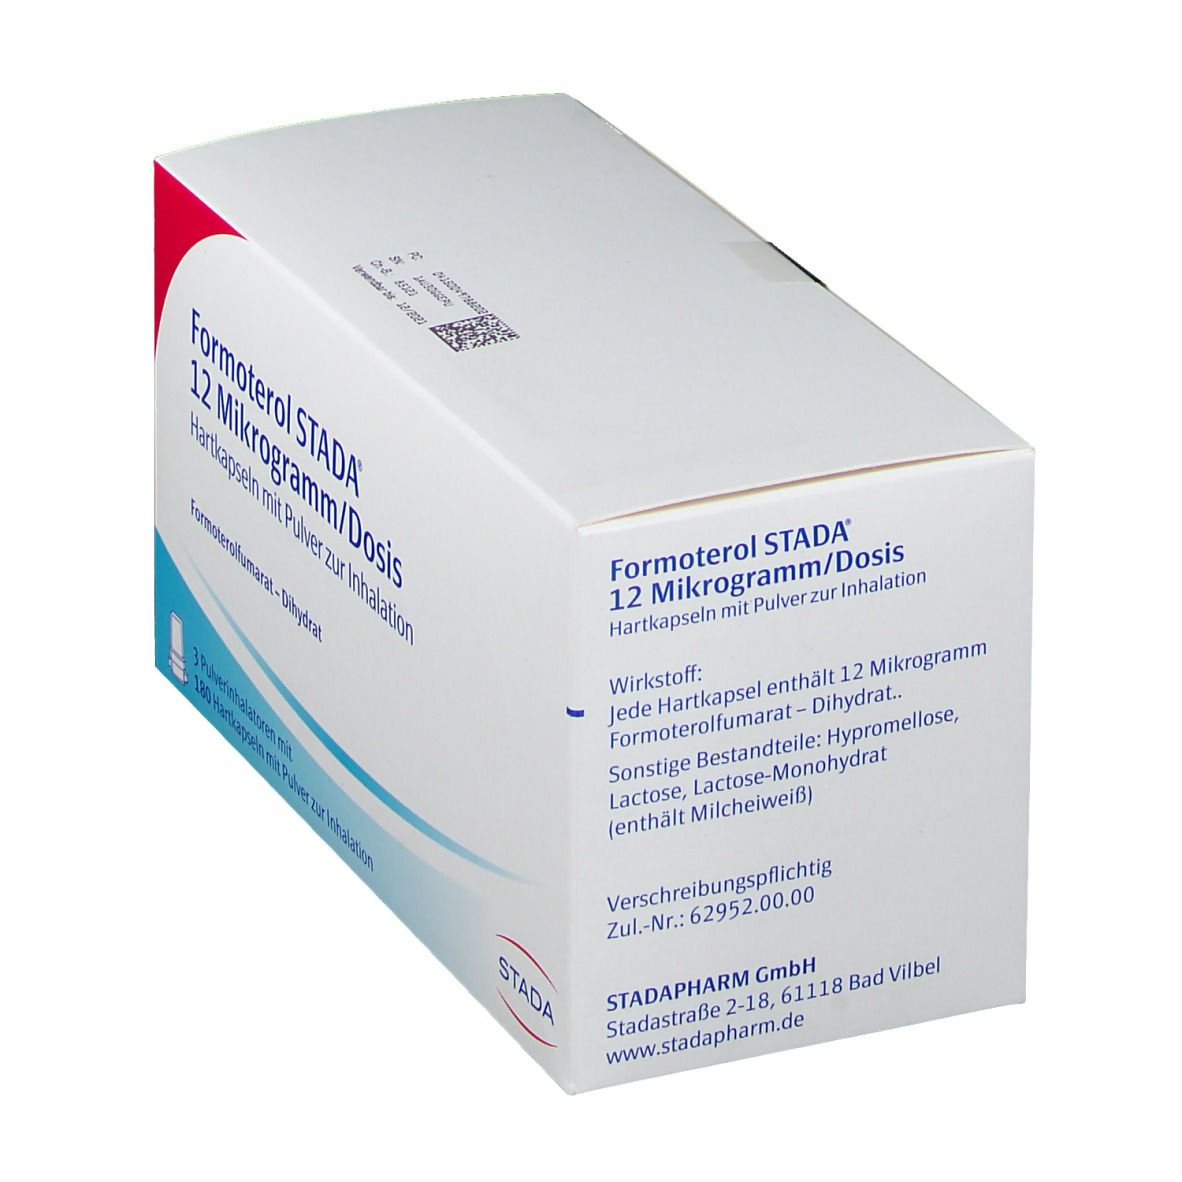 Formoterol STADA® 12 Mikrogramm/Dosis